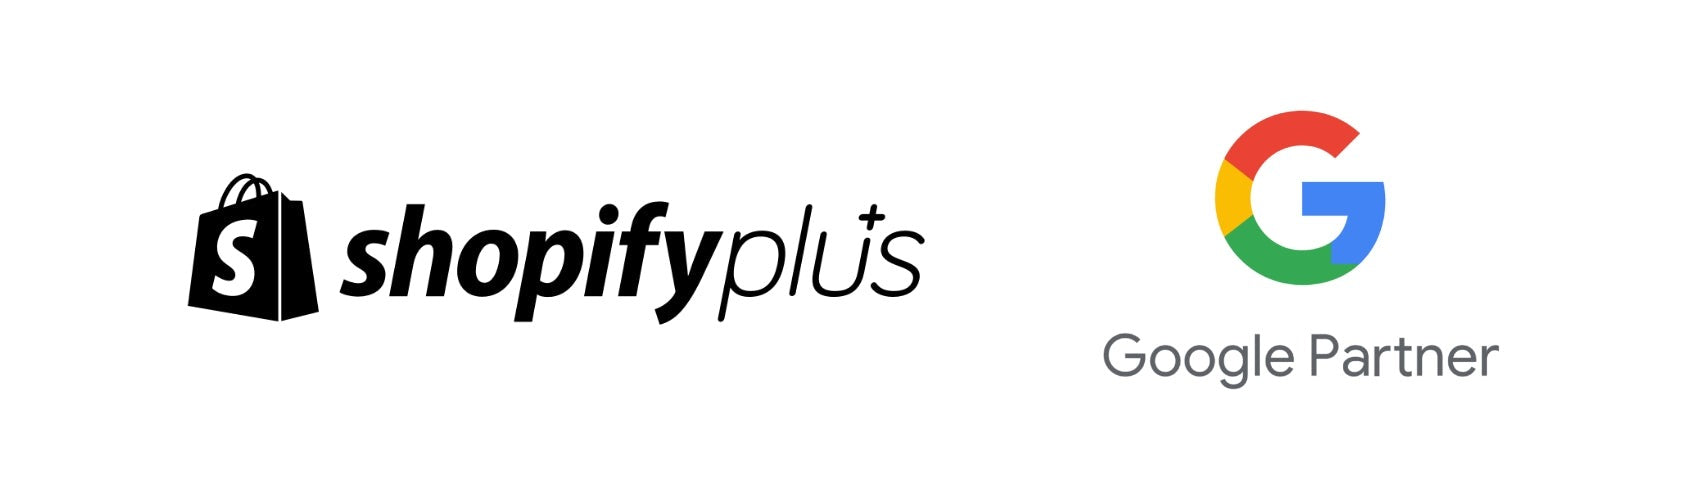 Shopify Plus Google Partner